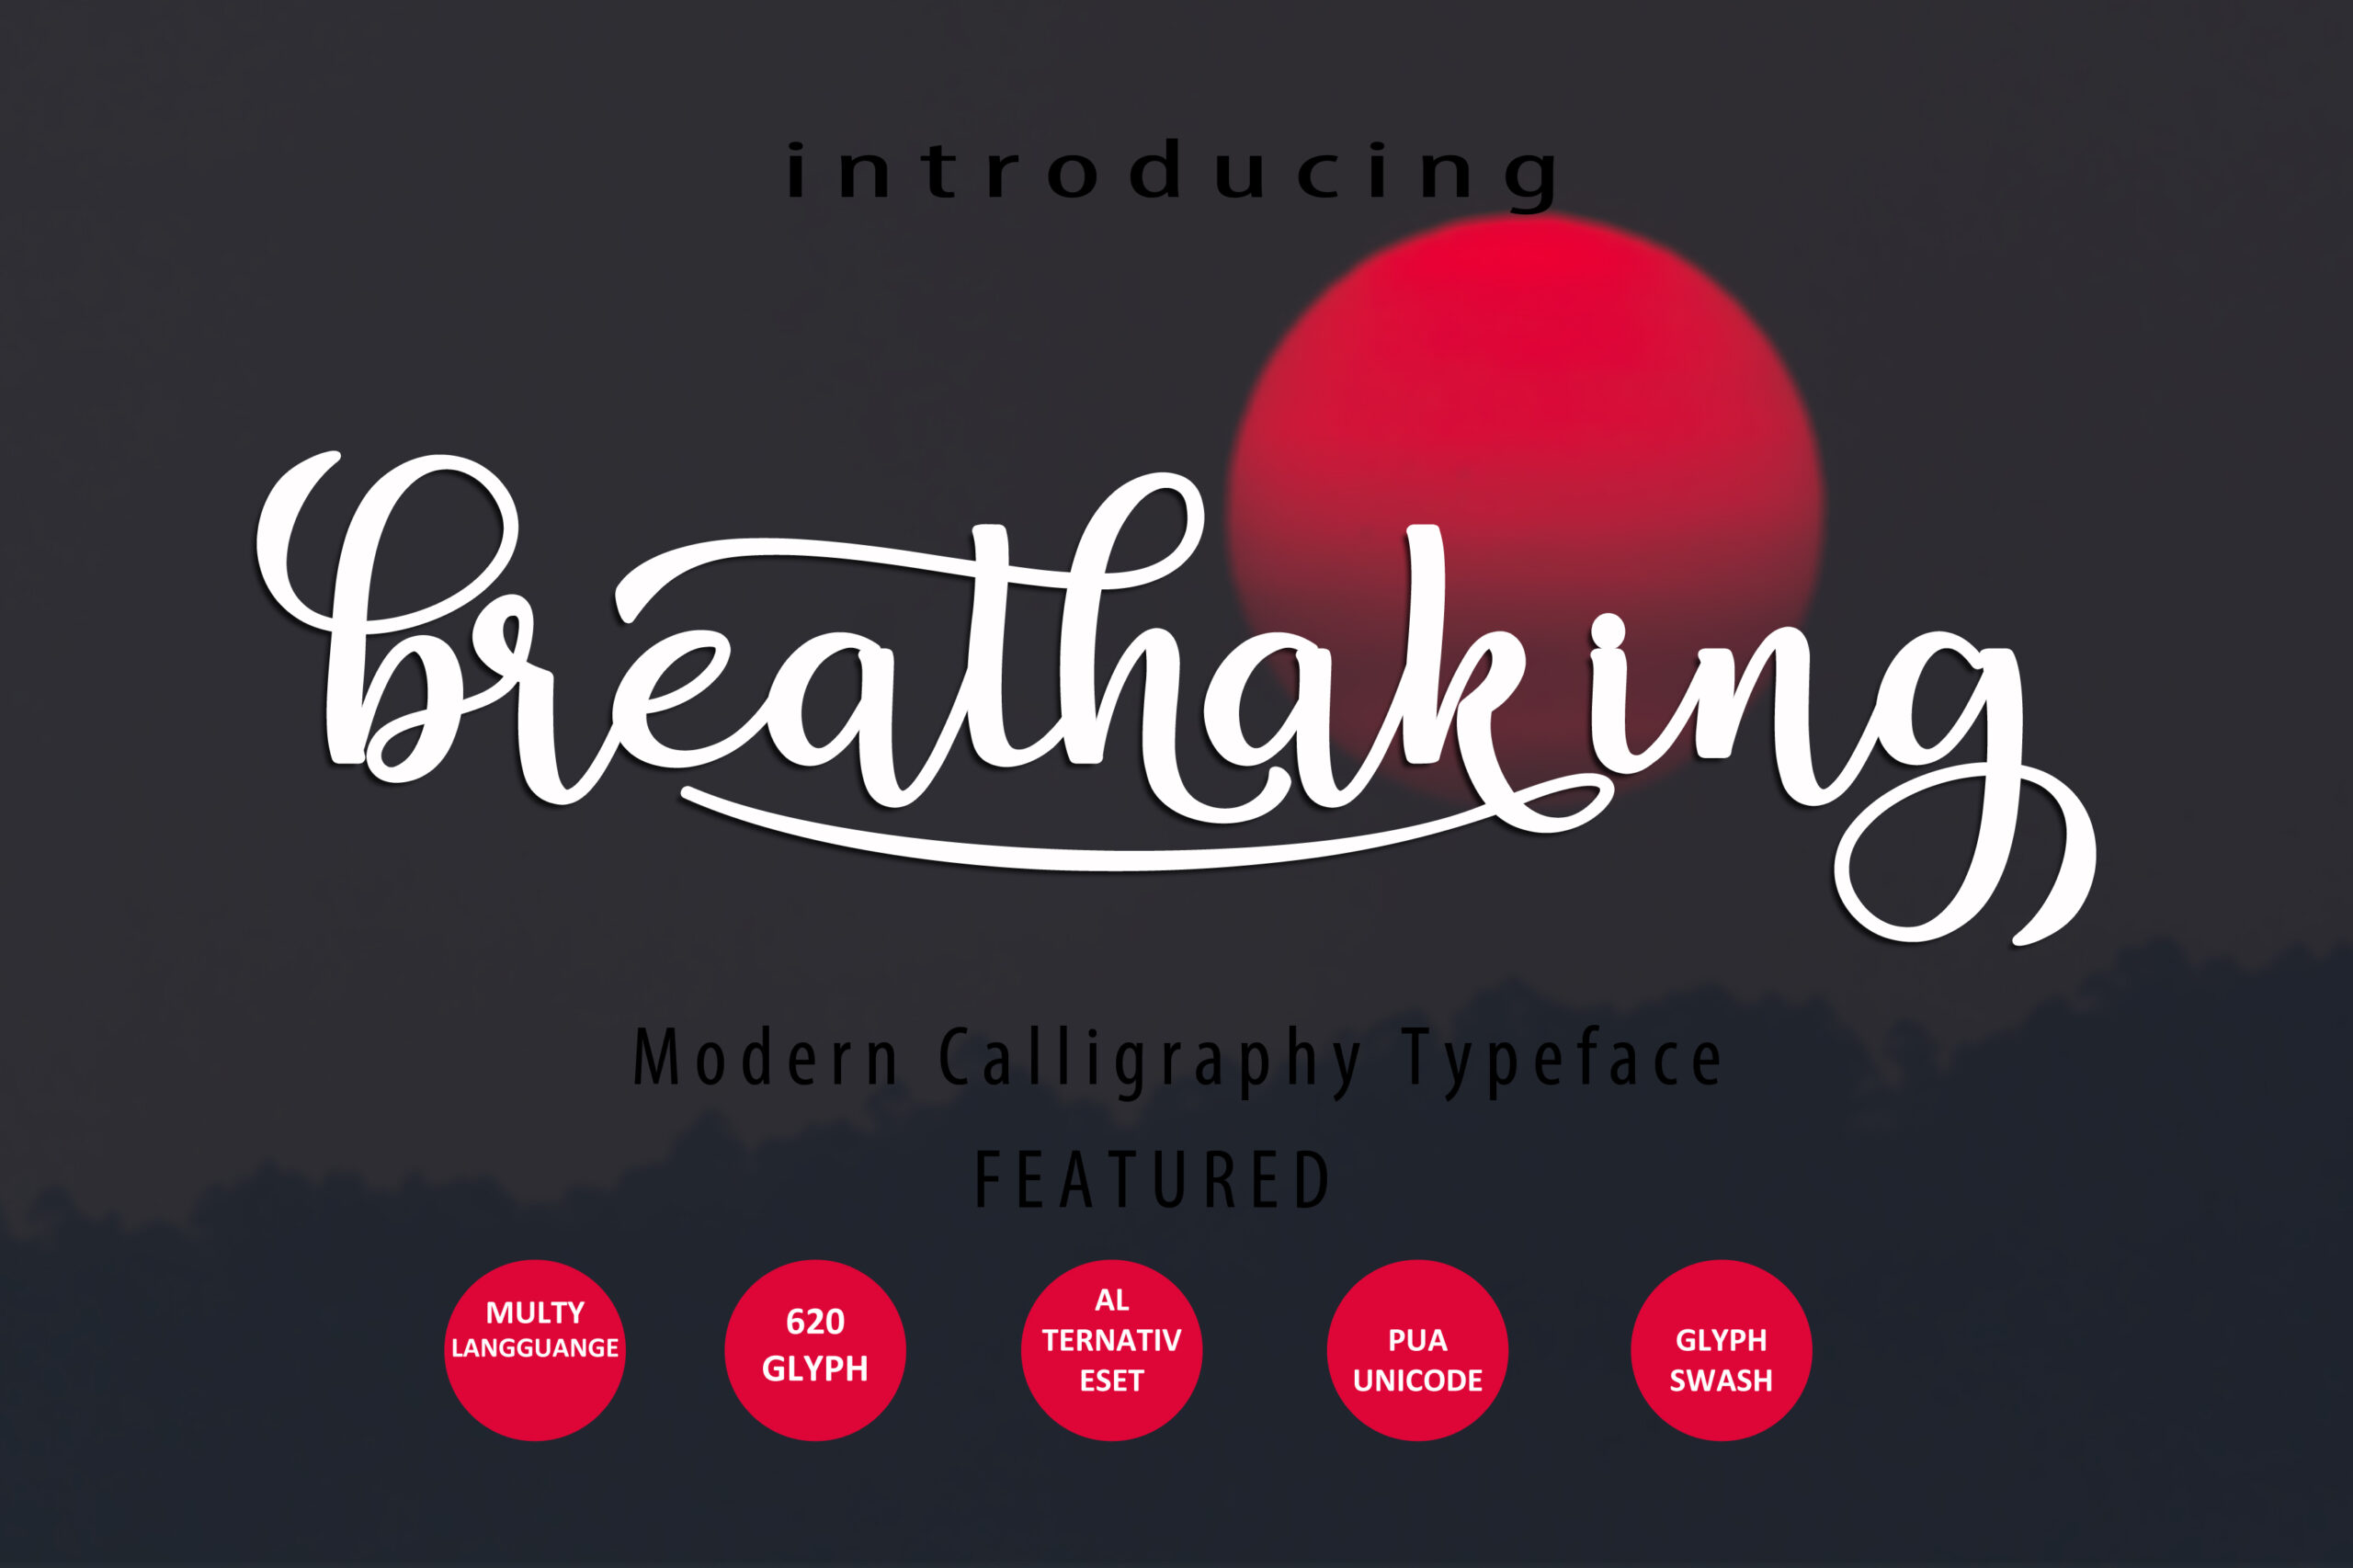 Breathaking Script Font